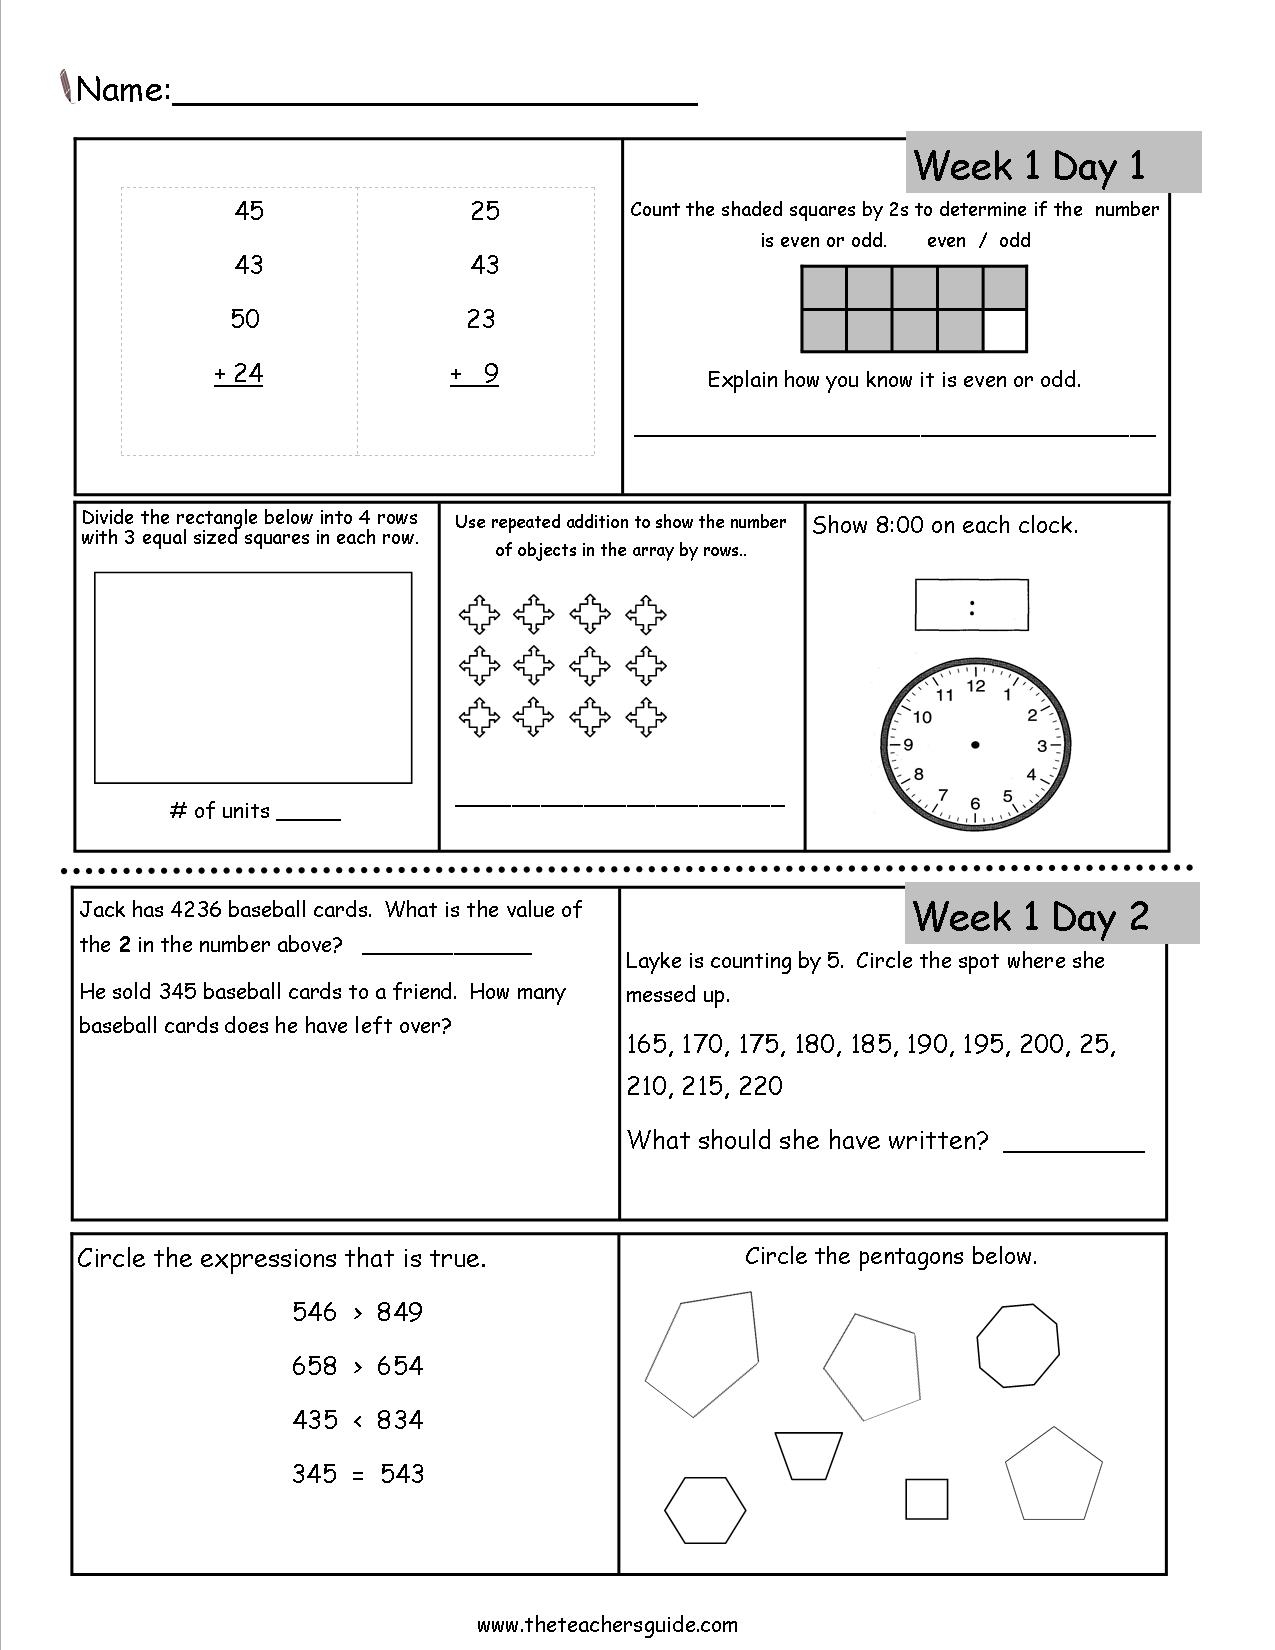 free-3rd-grade-daily-math-worksheets-math-worksheet-answers